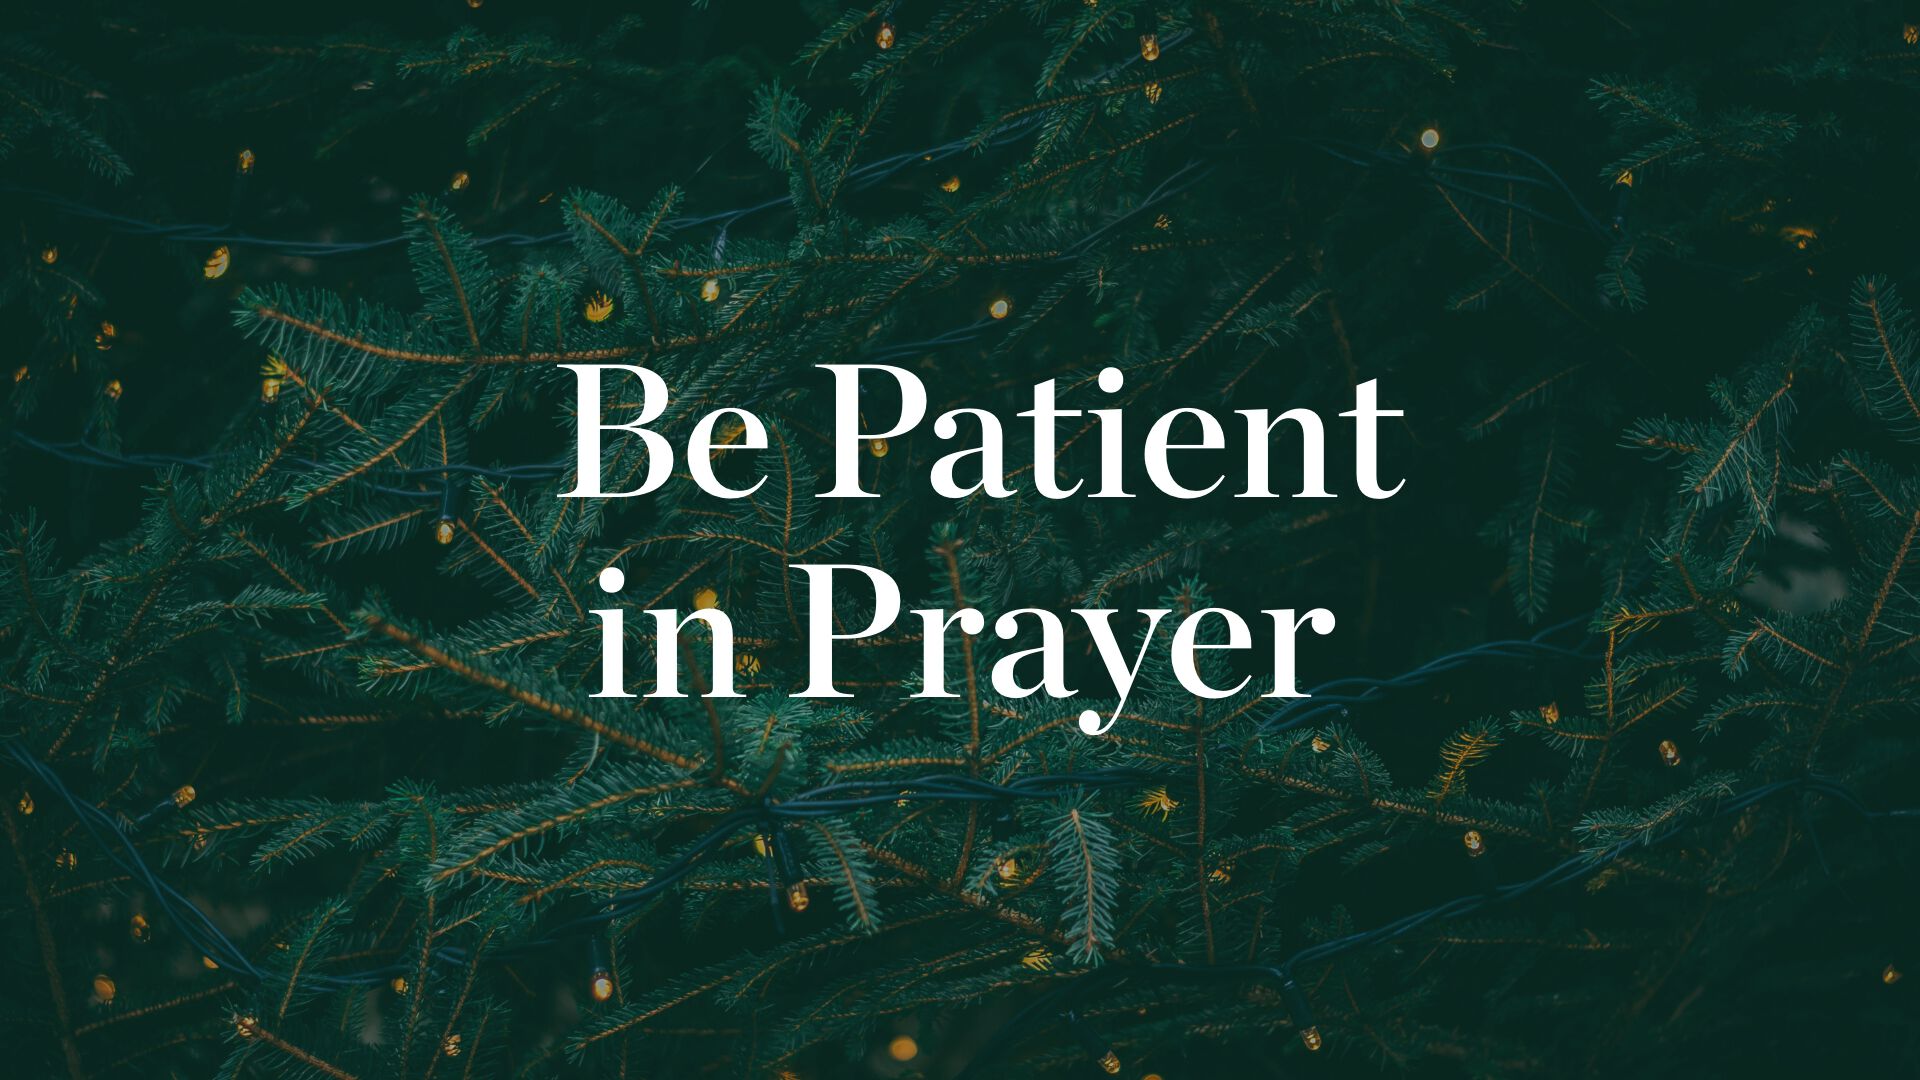  Be Patient in Prayer